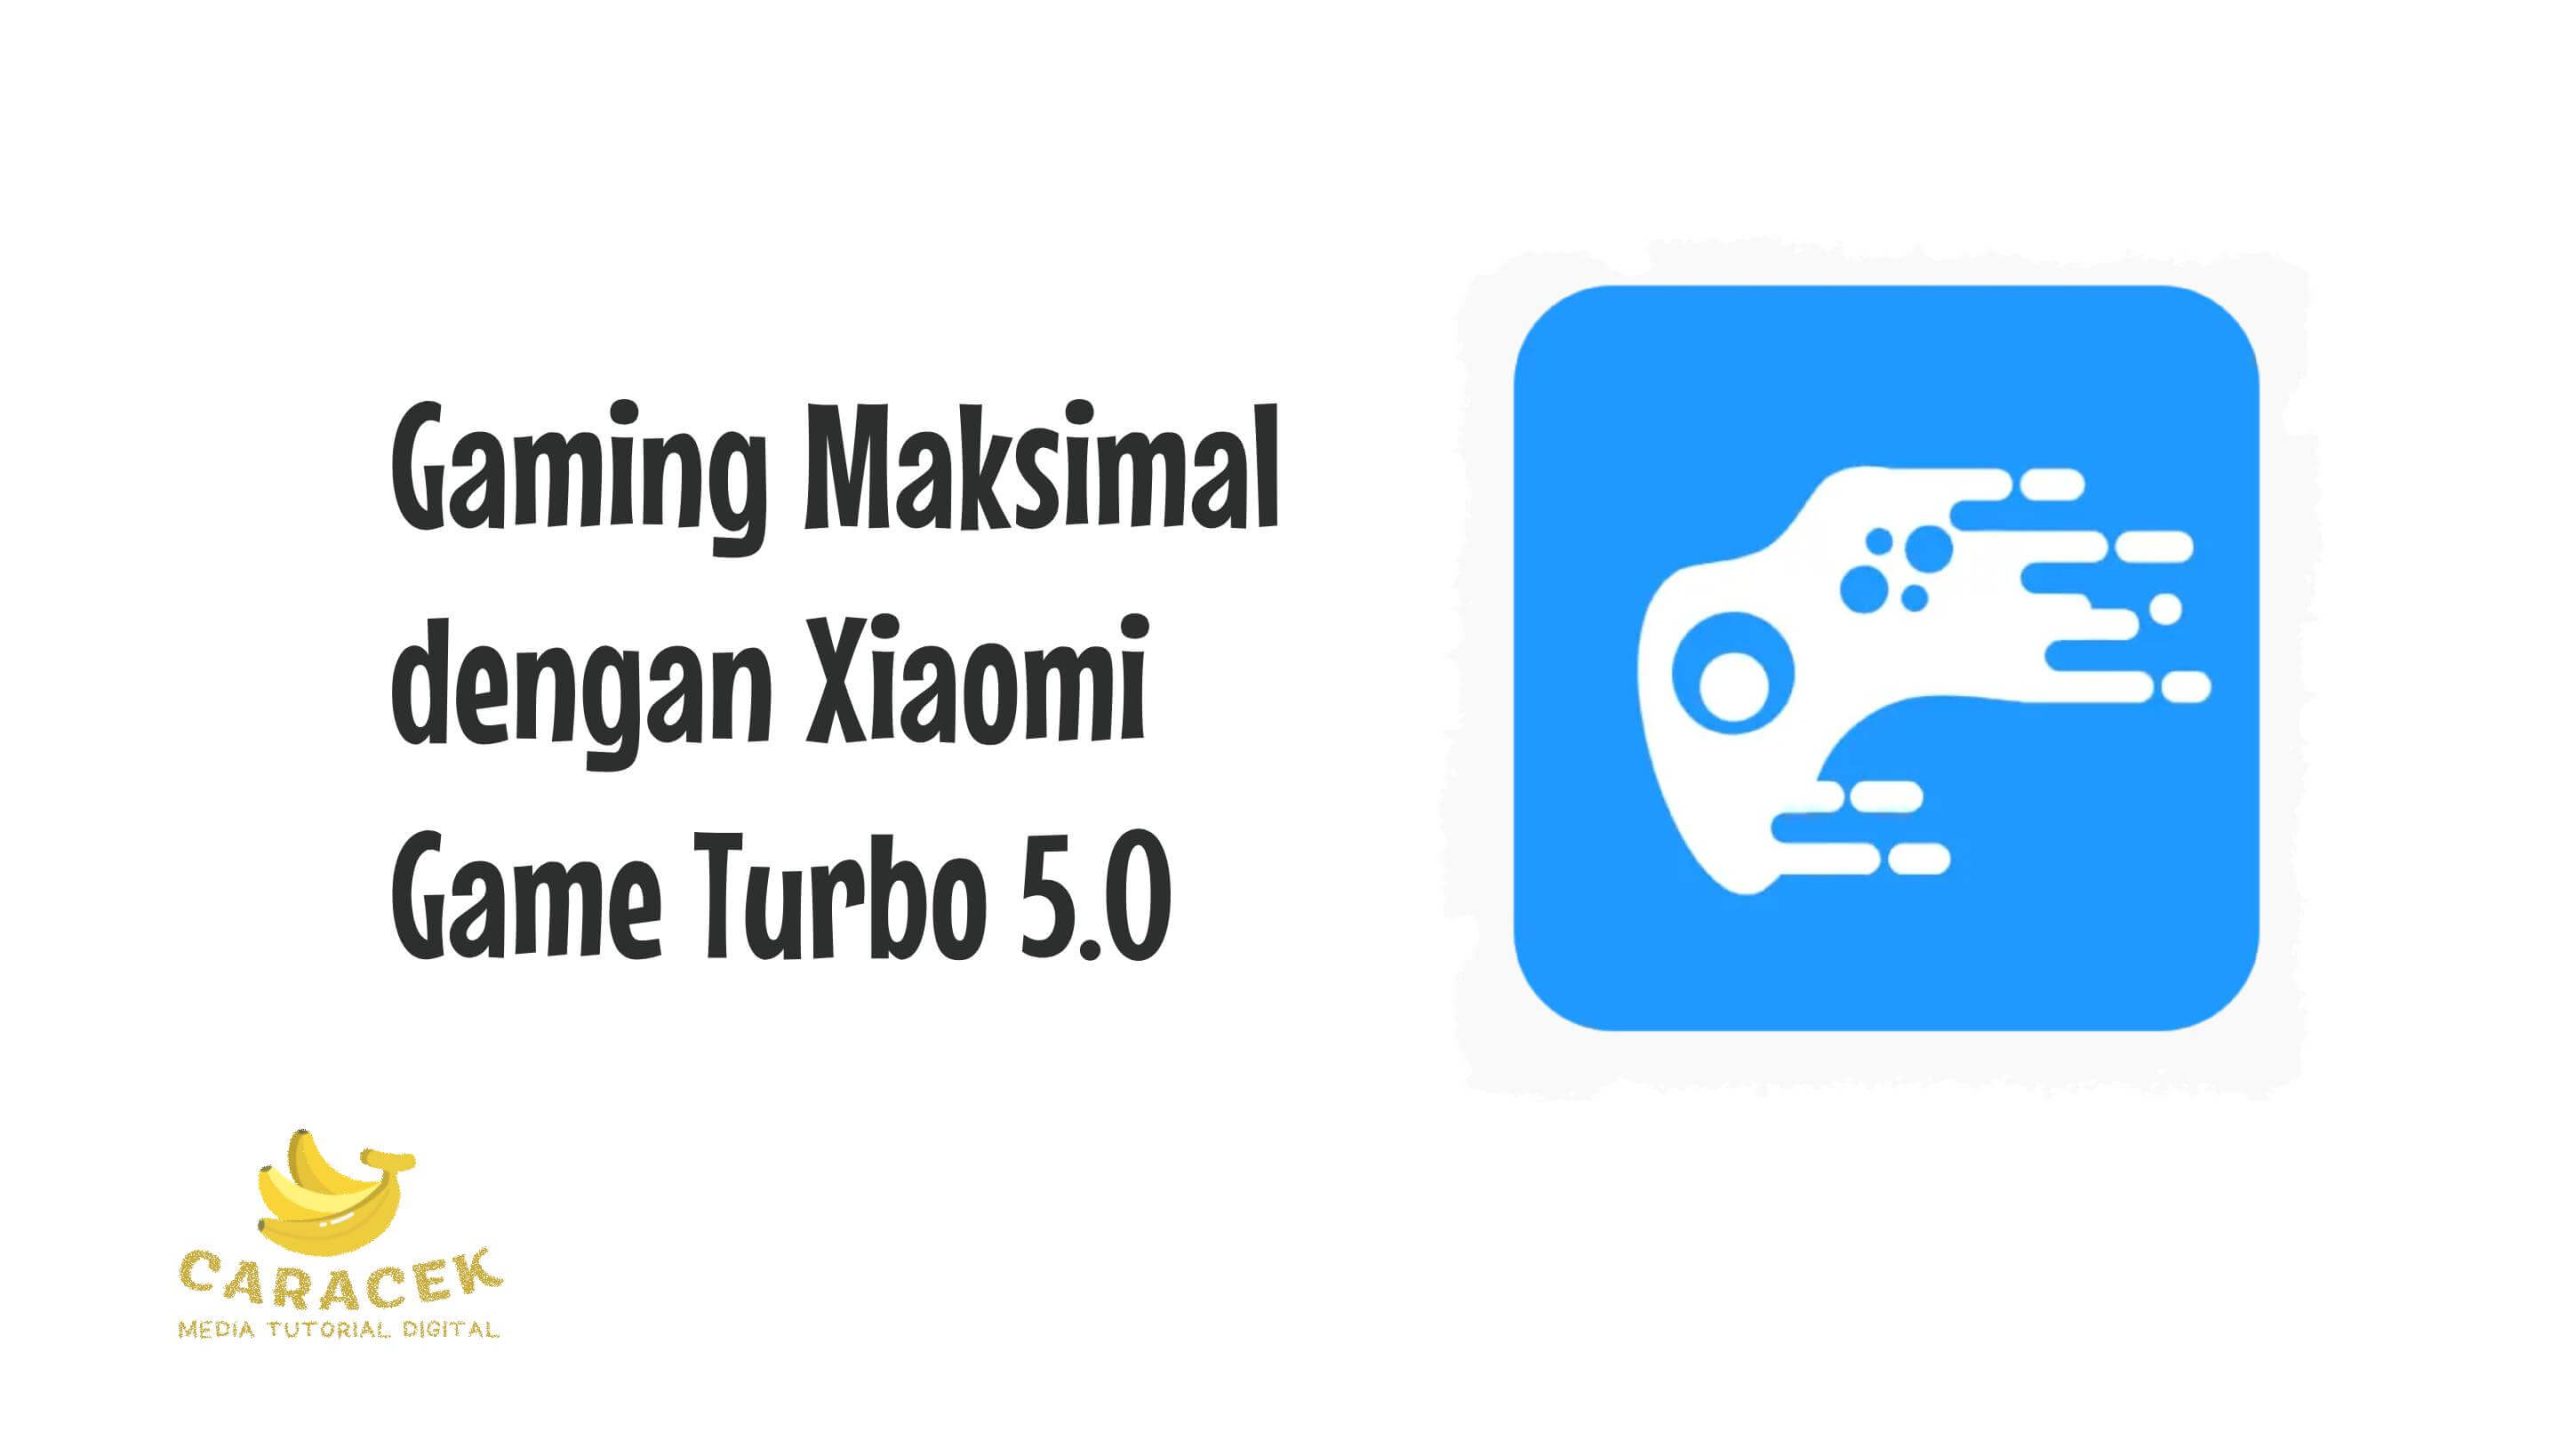 Xiaomi Game Turbo 5.0